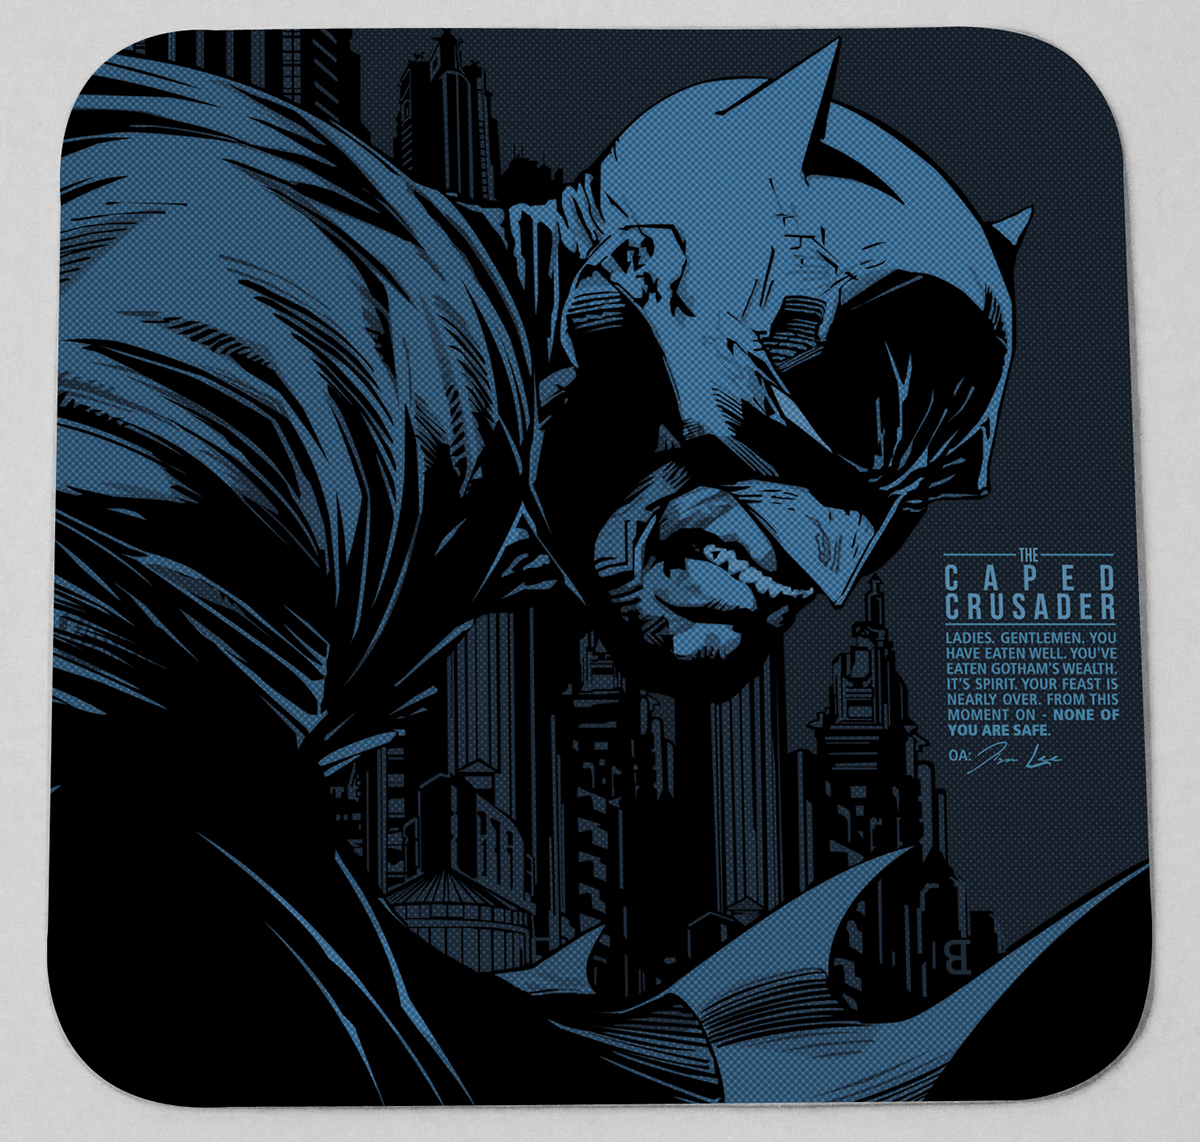 coaster the bat dark knight gotham's finest world's greatest detective caped crusader watchful protector silent guardian Bruce Wayne gotham